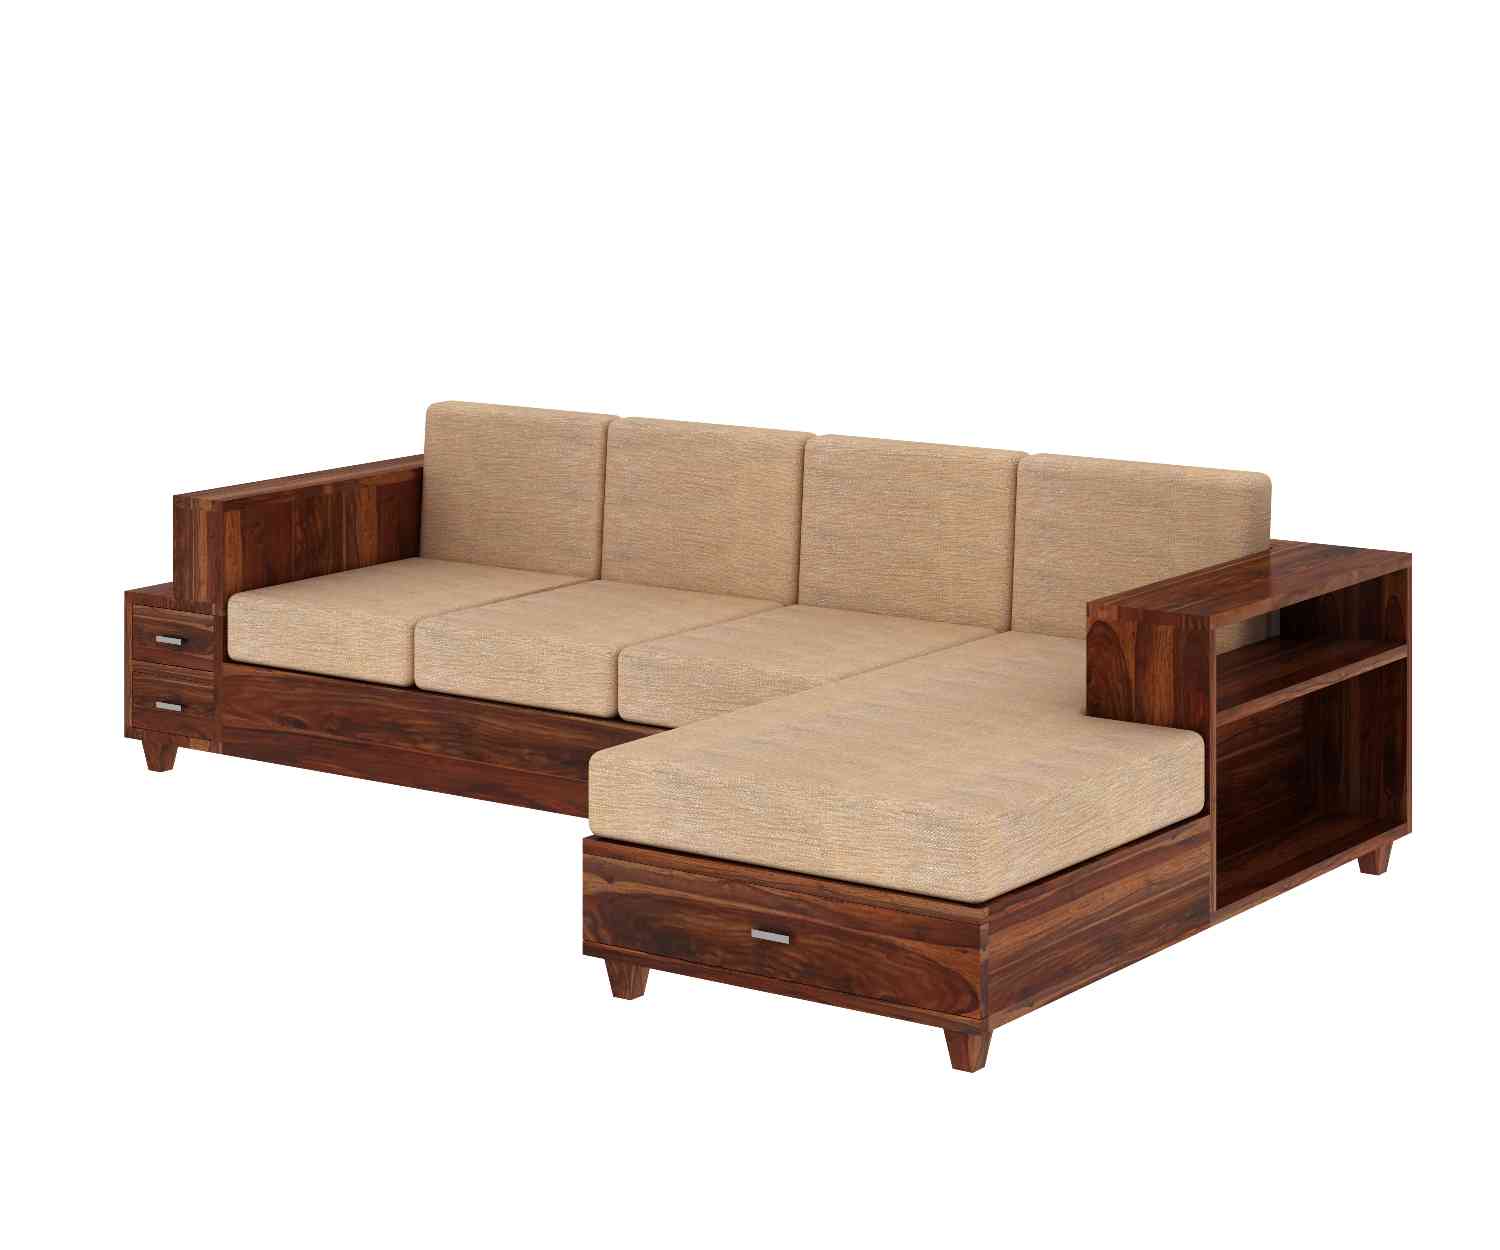 Woodora Solid Sheesham Wood 4 Seater L Shape Sofa (Natural Finish)